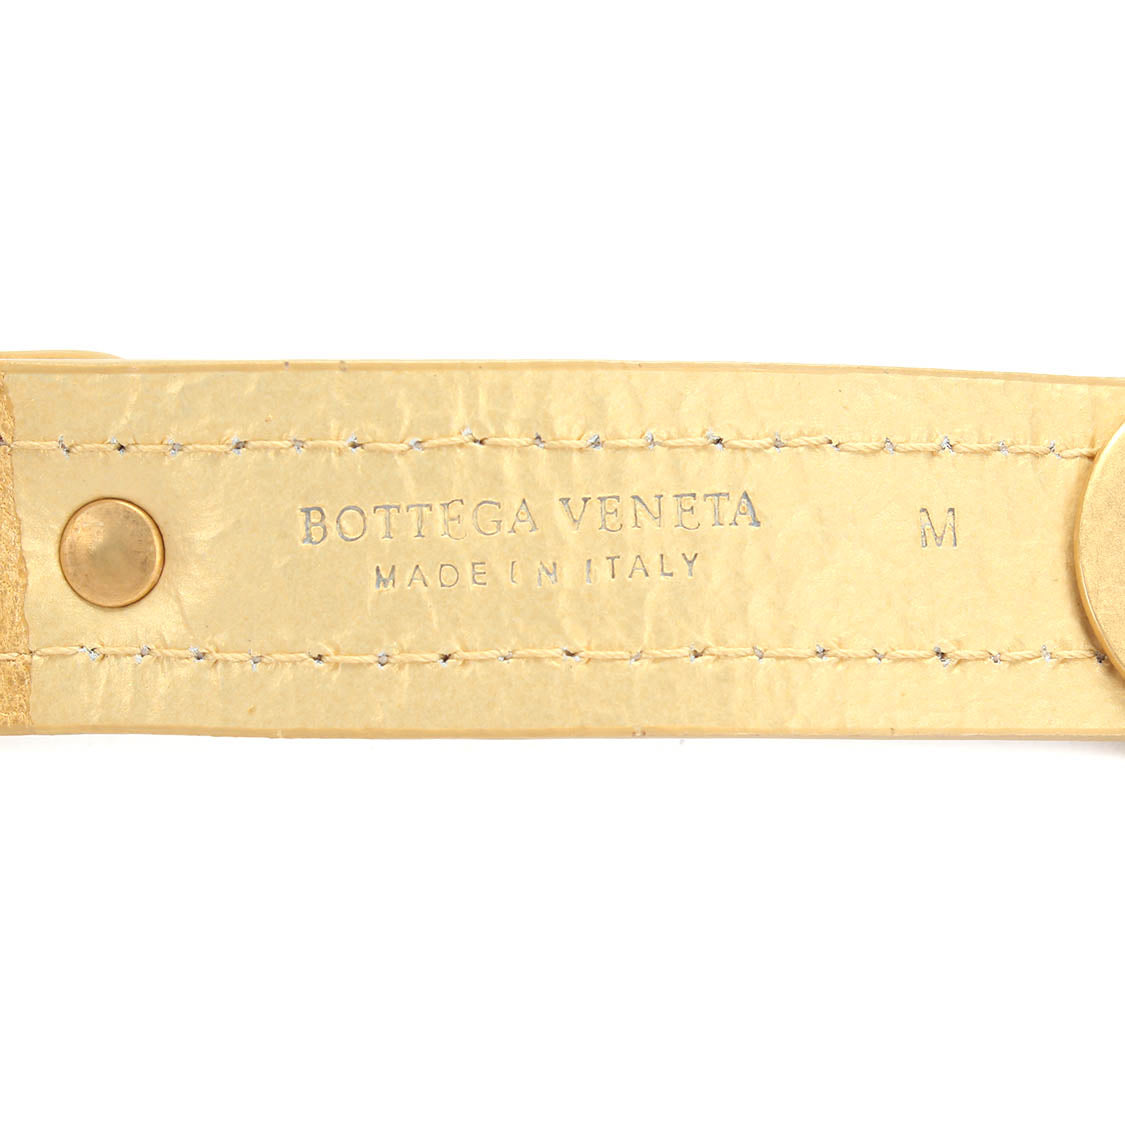 Metallic Leather Belt